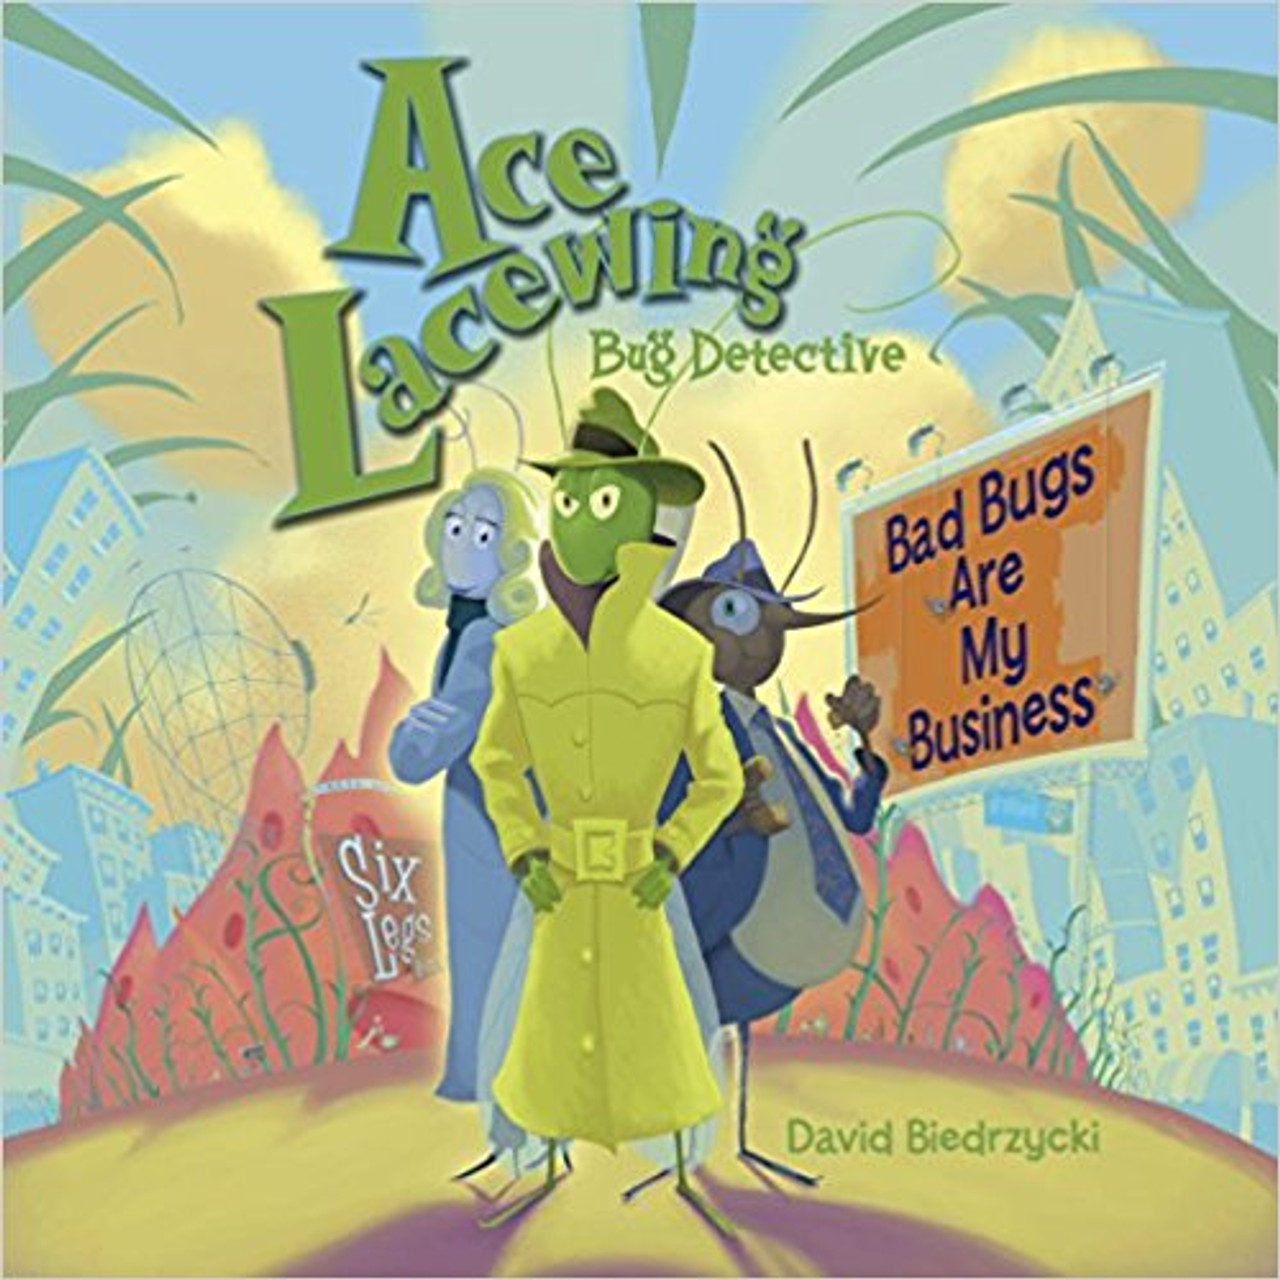 Ace Lacewing, Bug Detective: Bas Bugs Are My Business by David Biedrzycki